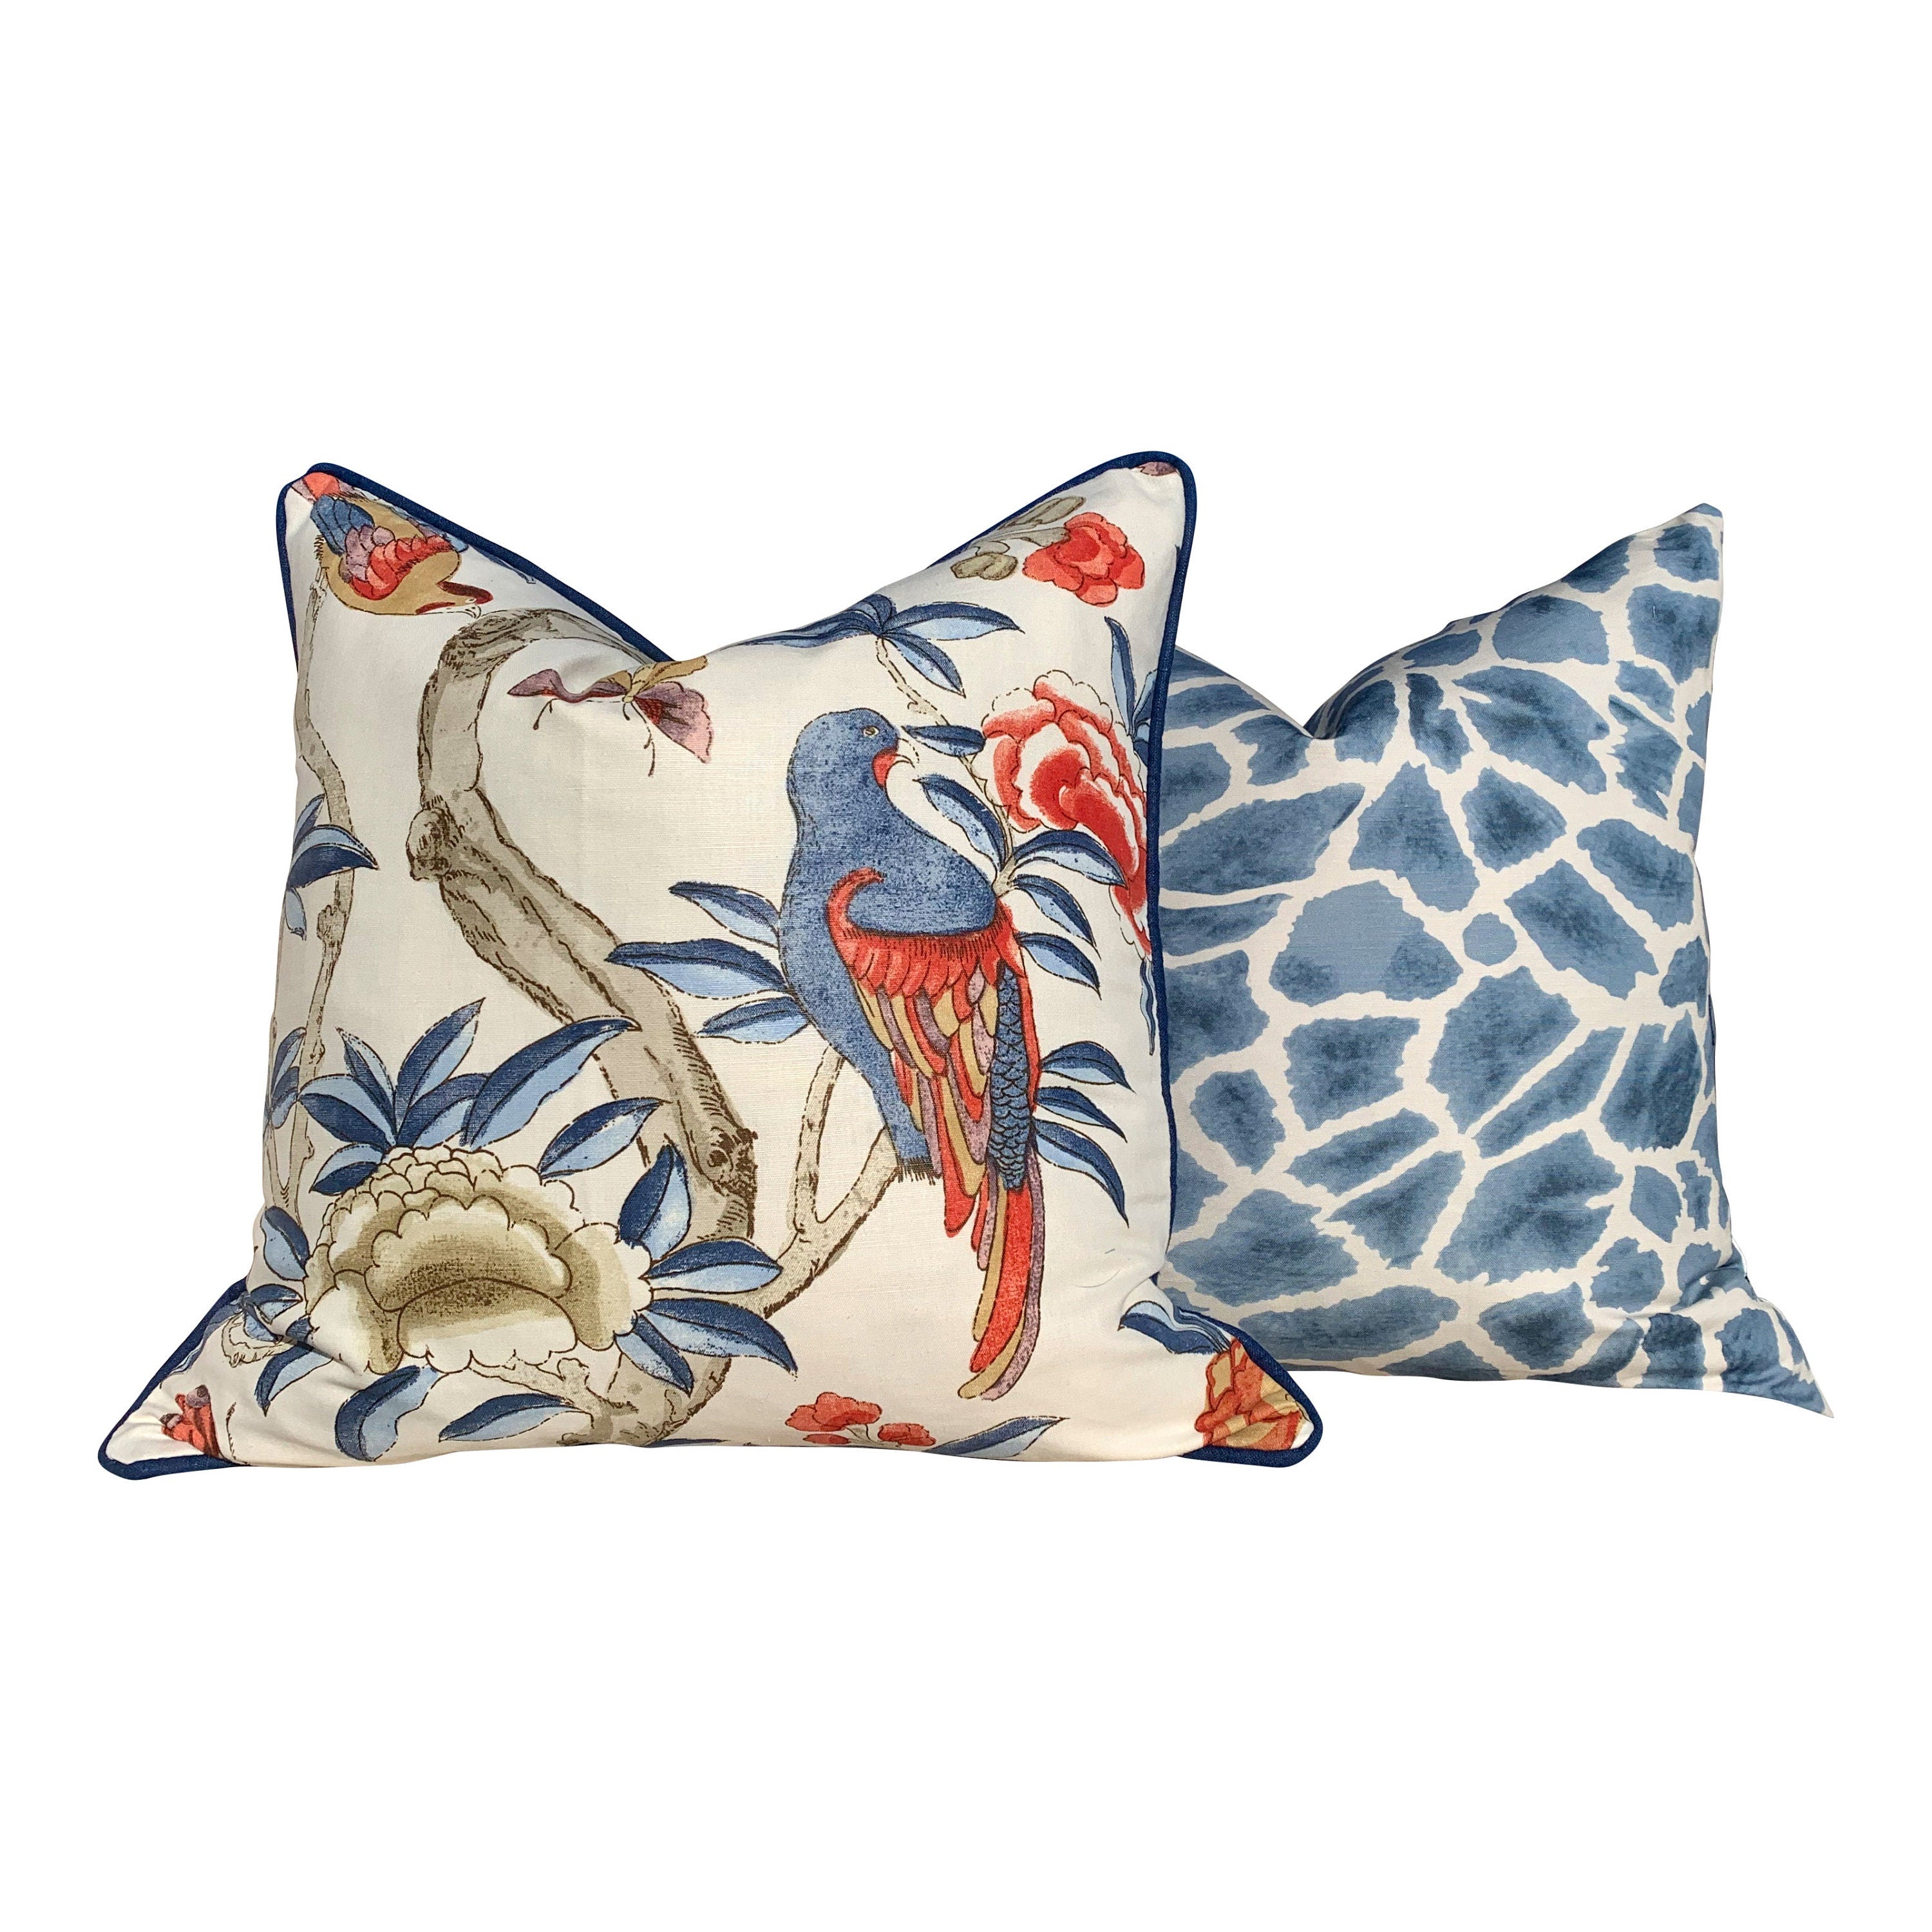 Thibaut Makena Decorative Pillow in Slate Blue. Giraffe Lumbar Cushion Cover Blue. Designer Pillow Cover. Accent throw pillow.